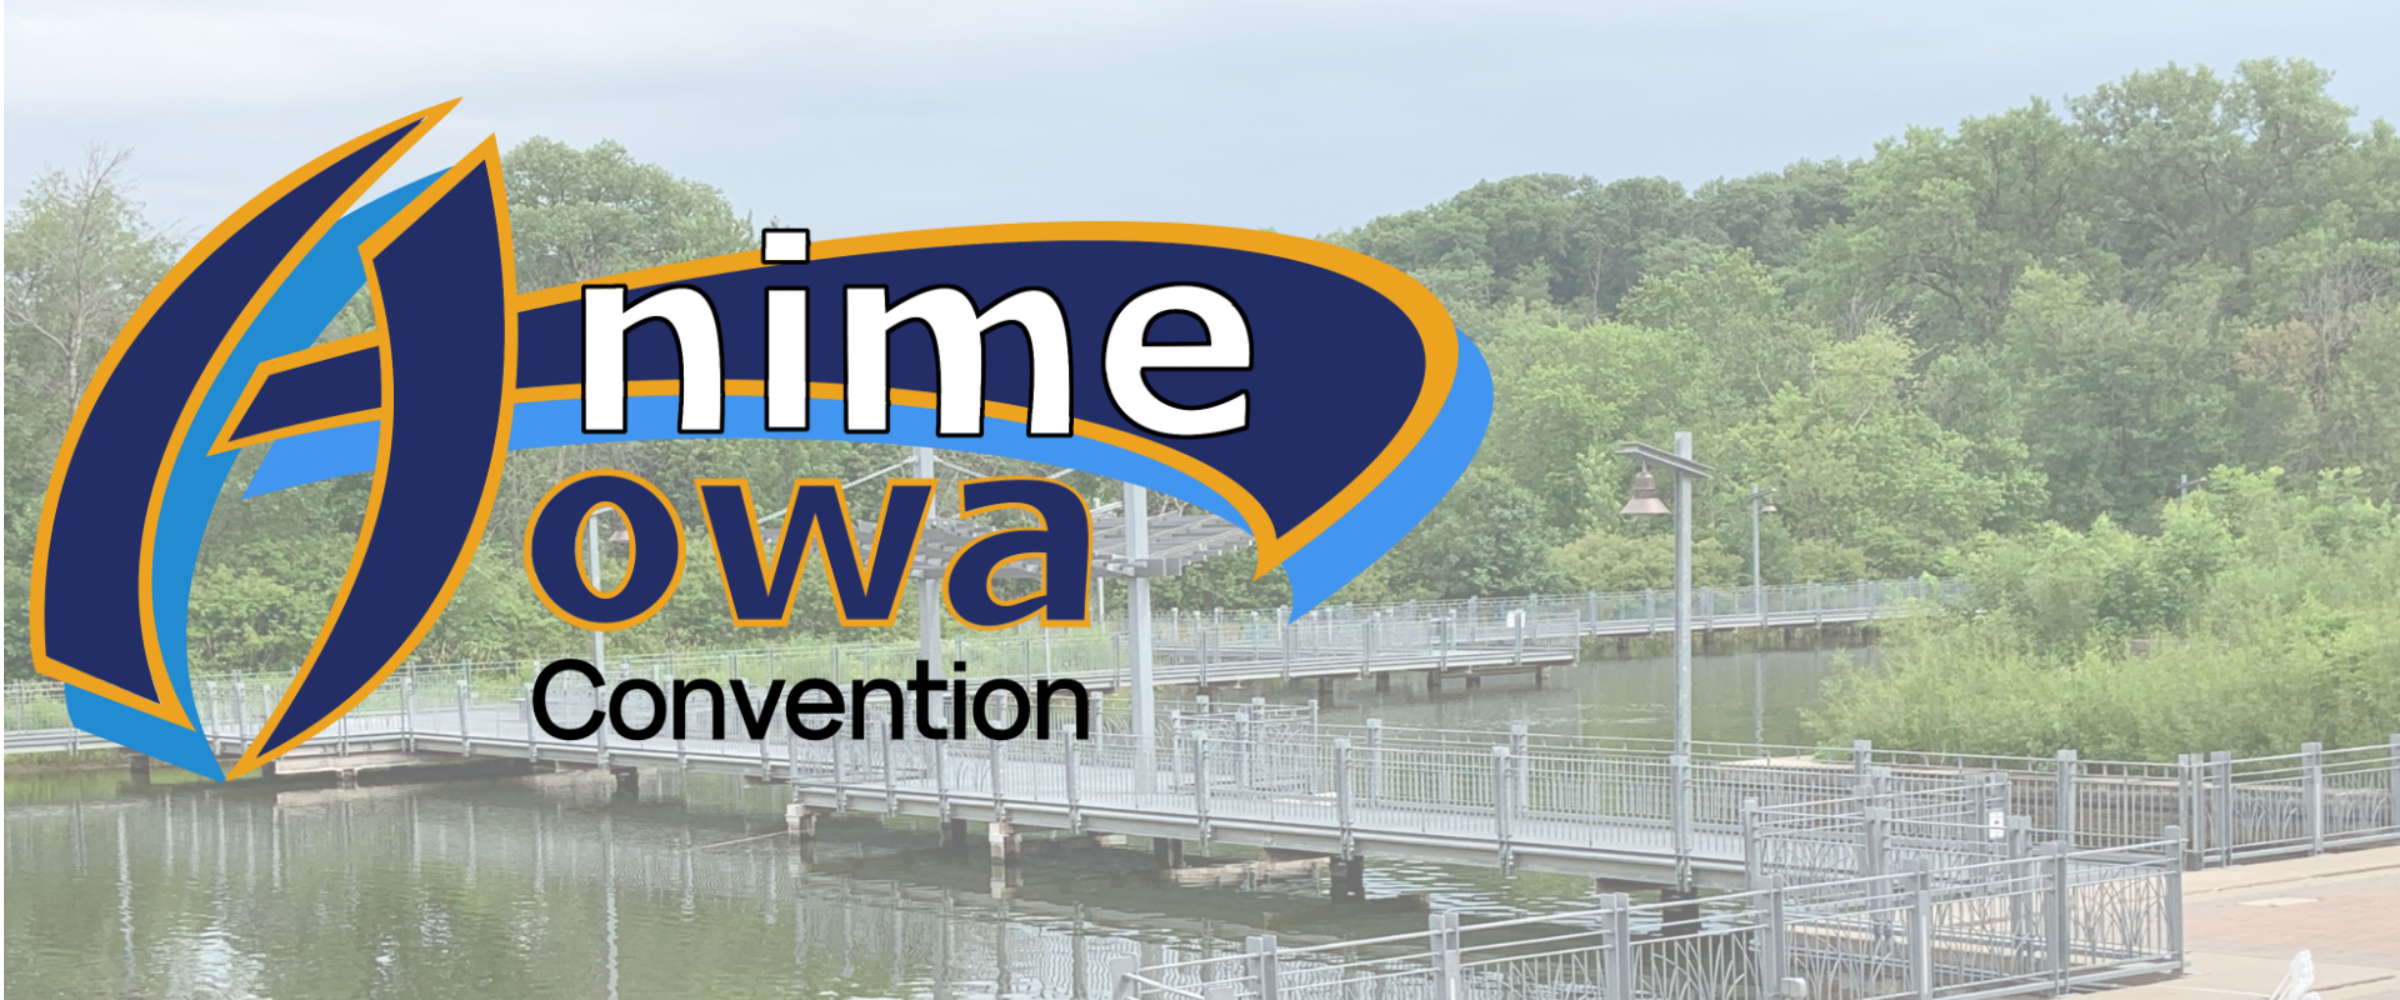 Anime Iowa